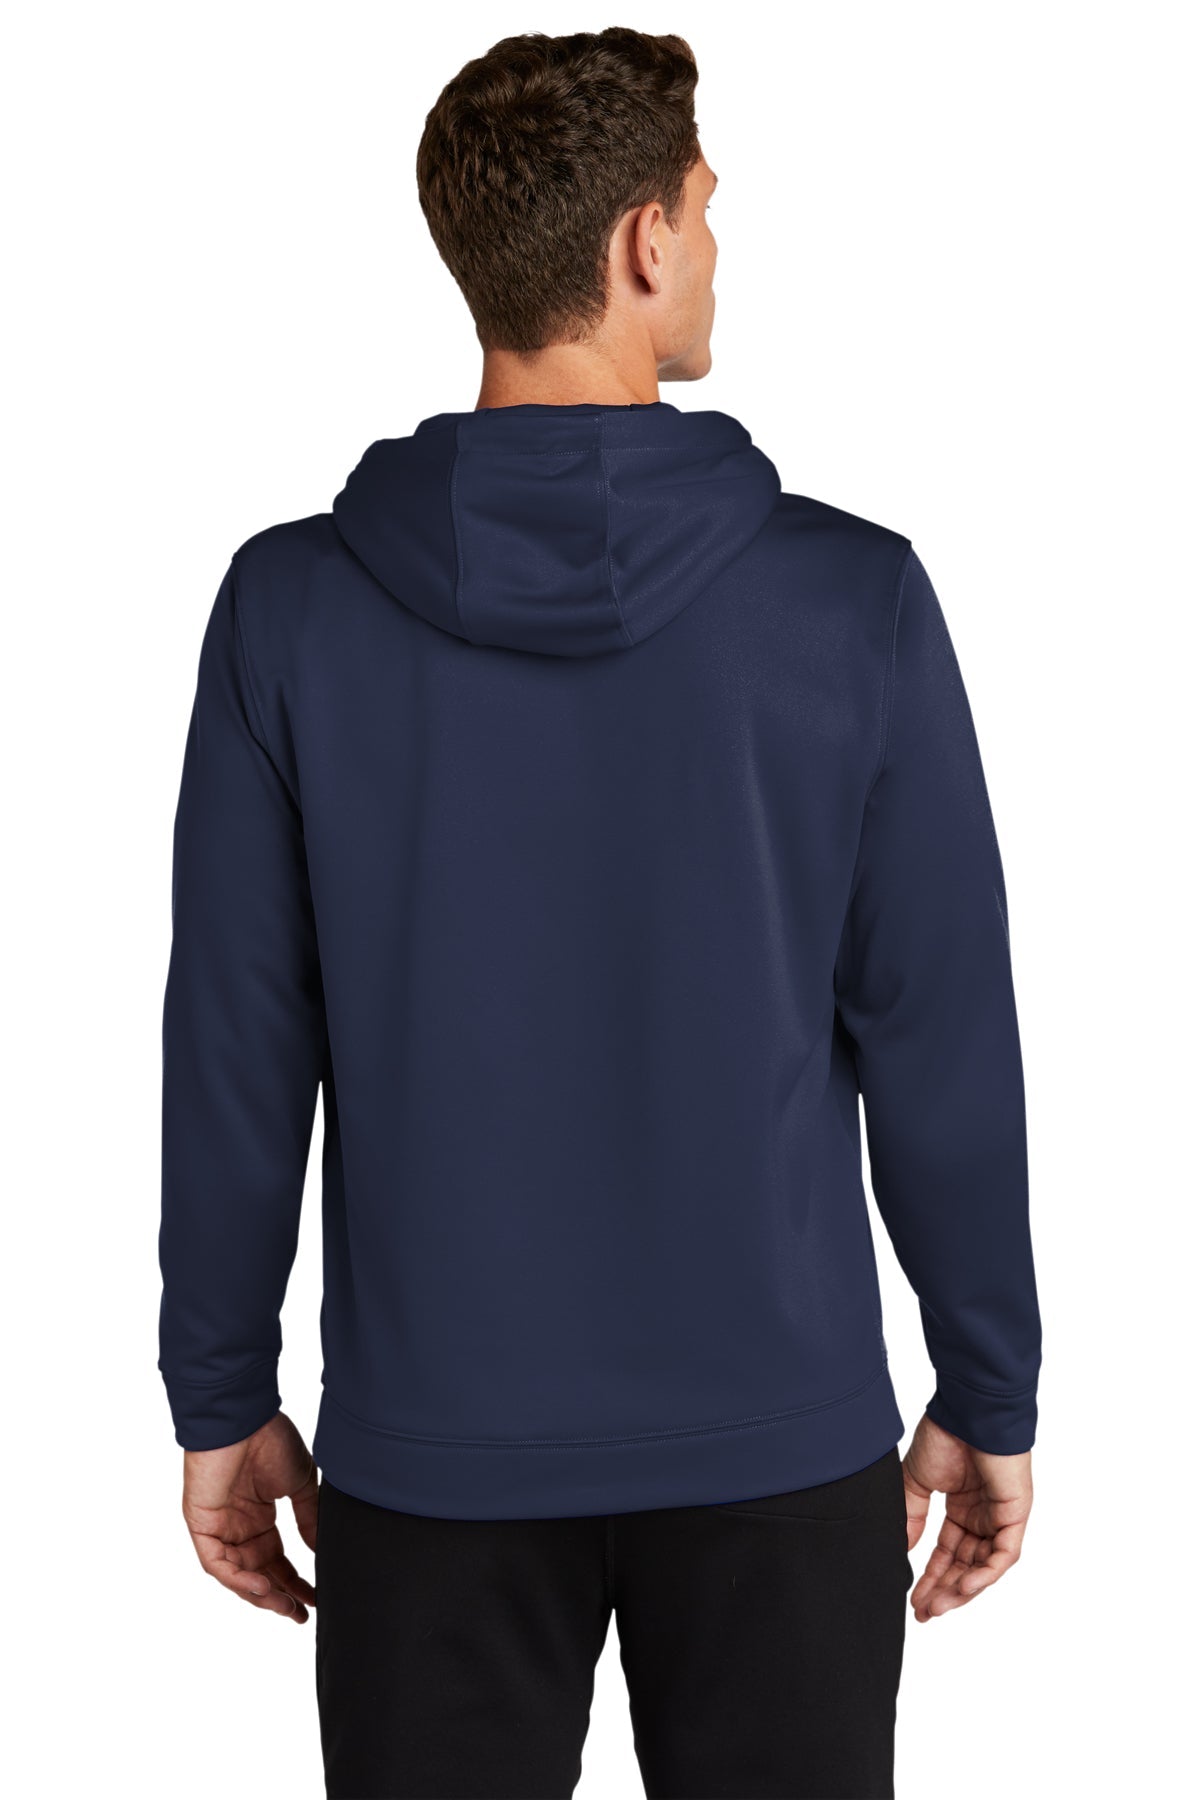 sport-tek_f244 _navy_company_logo_sweatshirts